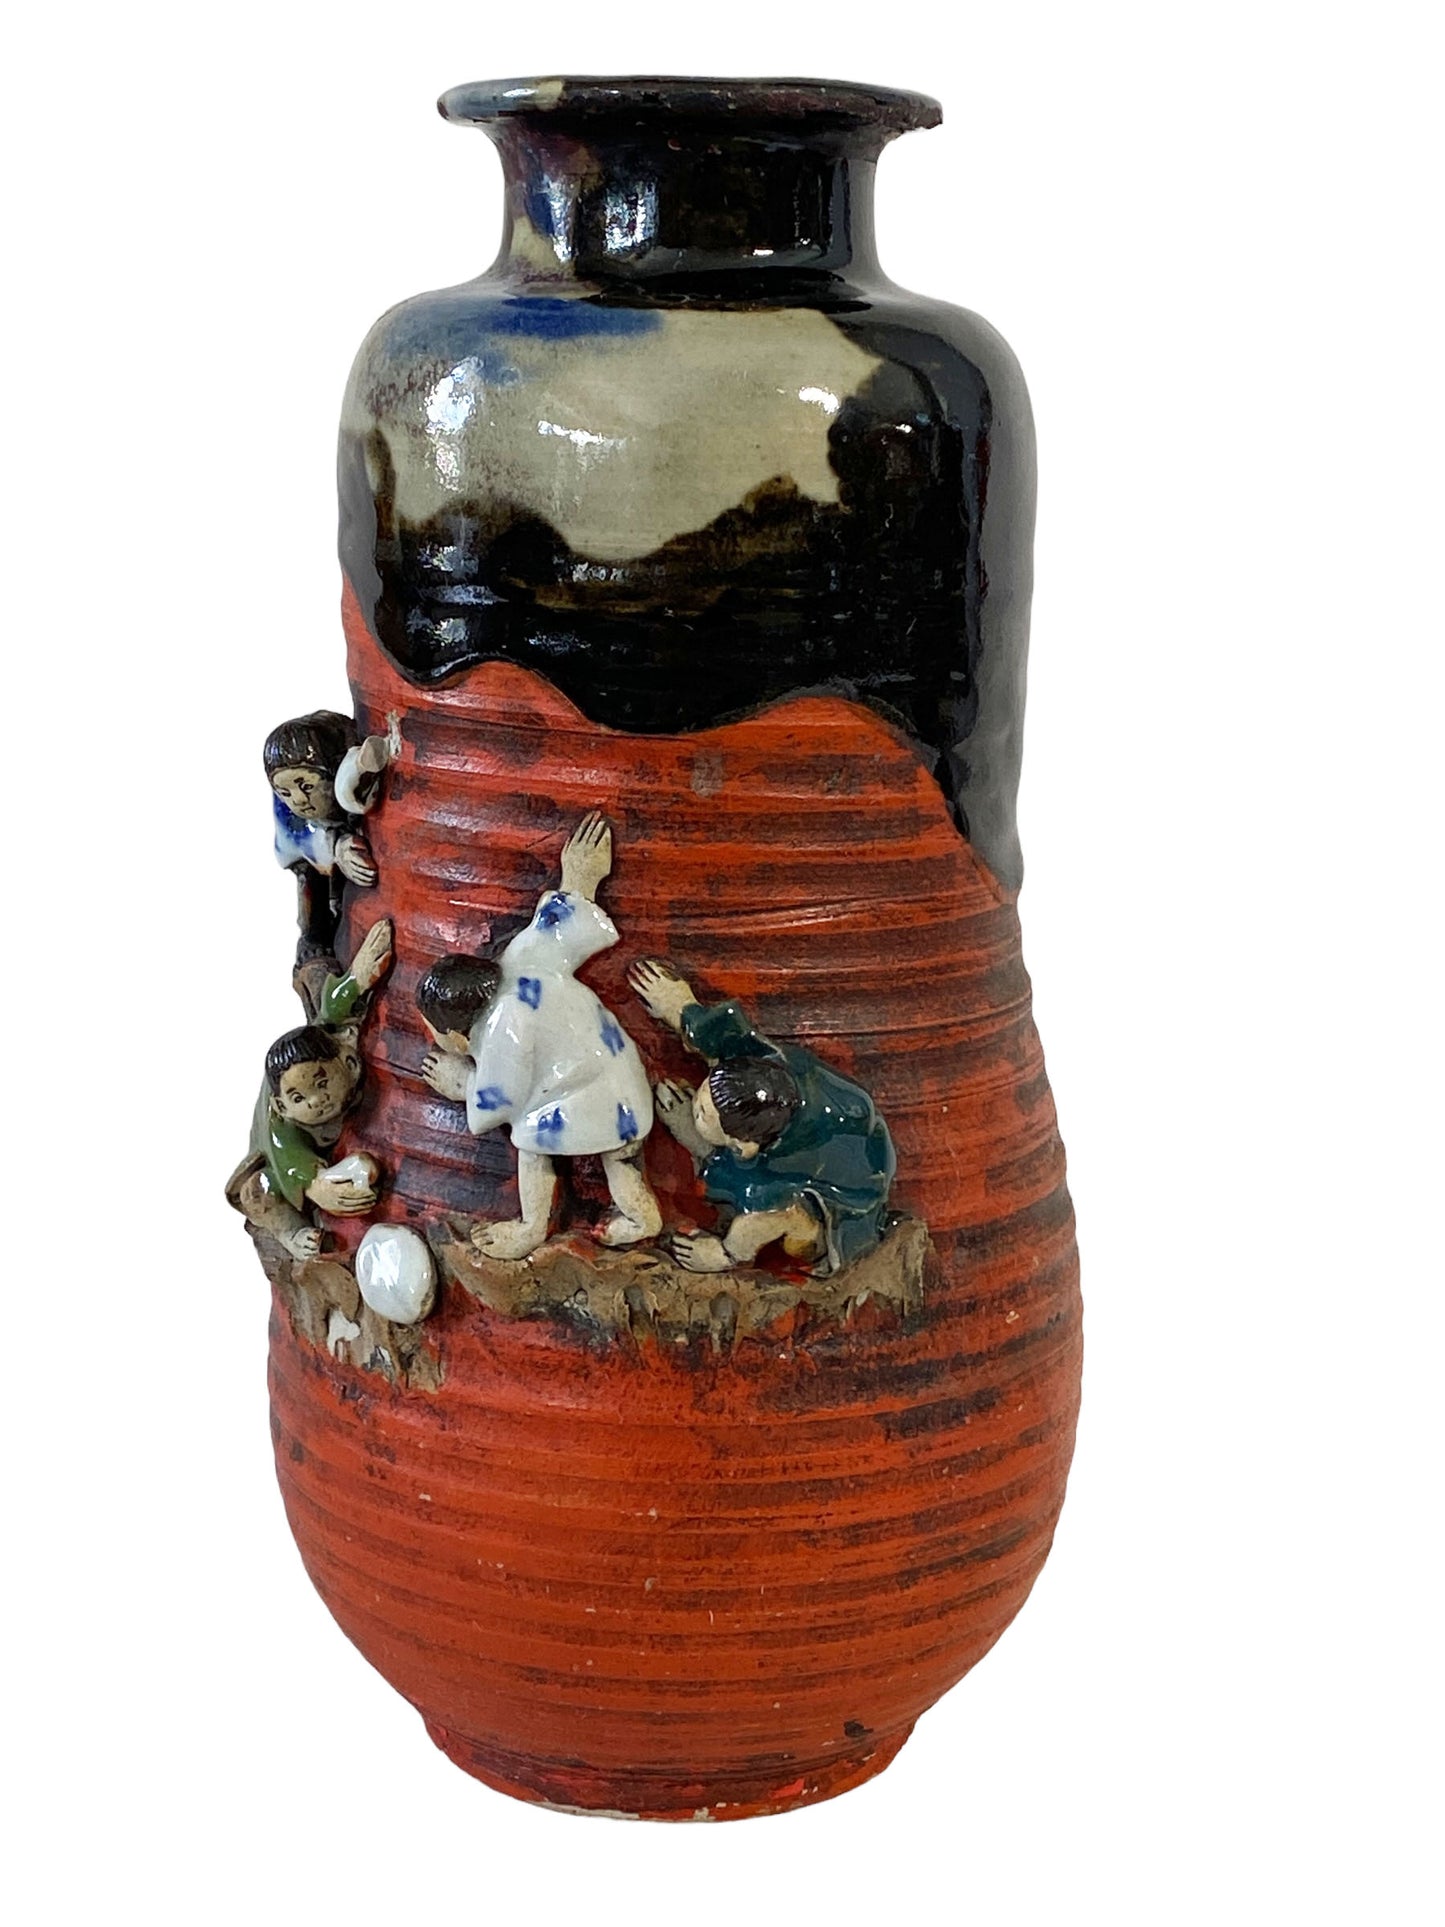 #5700 Chinoiserie Decorative Ceramic Vase w/High Relief Boys Figures 9.25"h